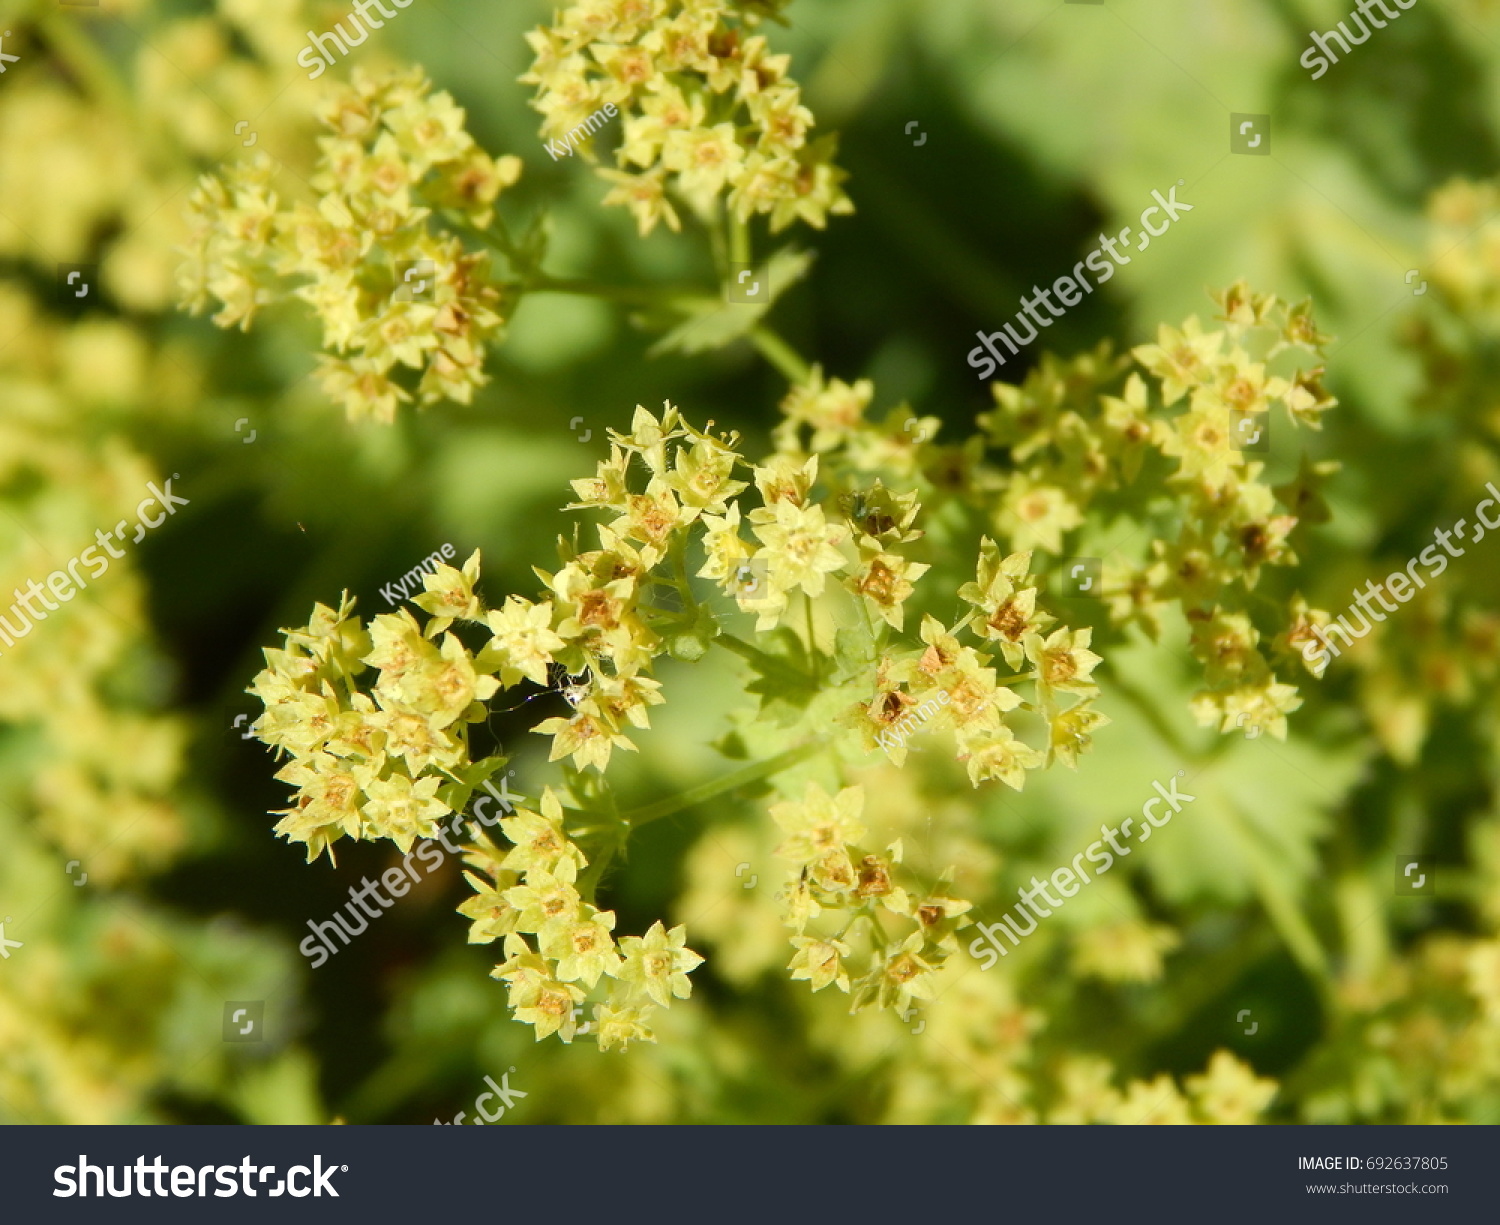 Lady's Mantle Flowers
Alchemilla Mollis #692637805